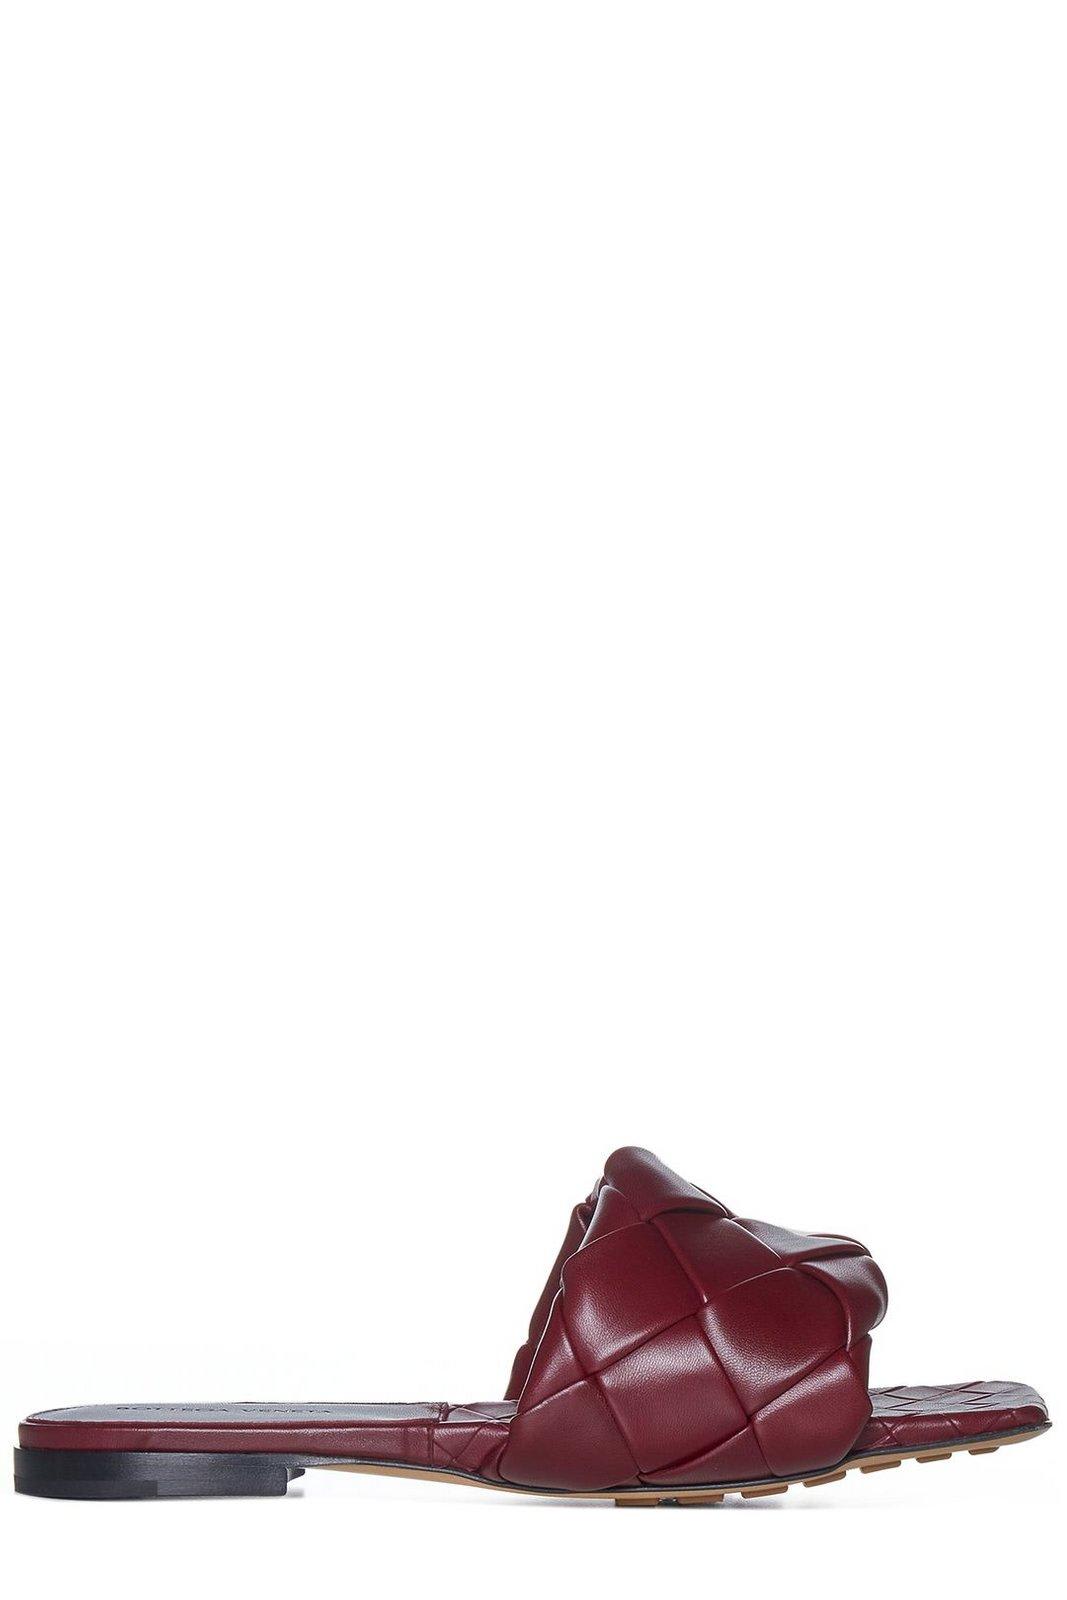 Bottega Veneta The Lido Flat Sandals In Red